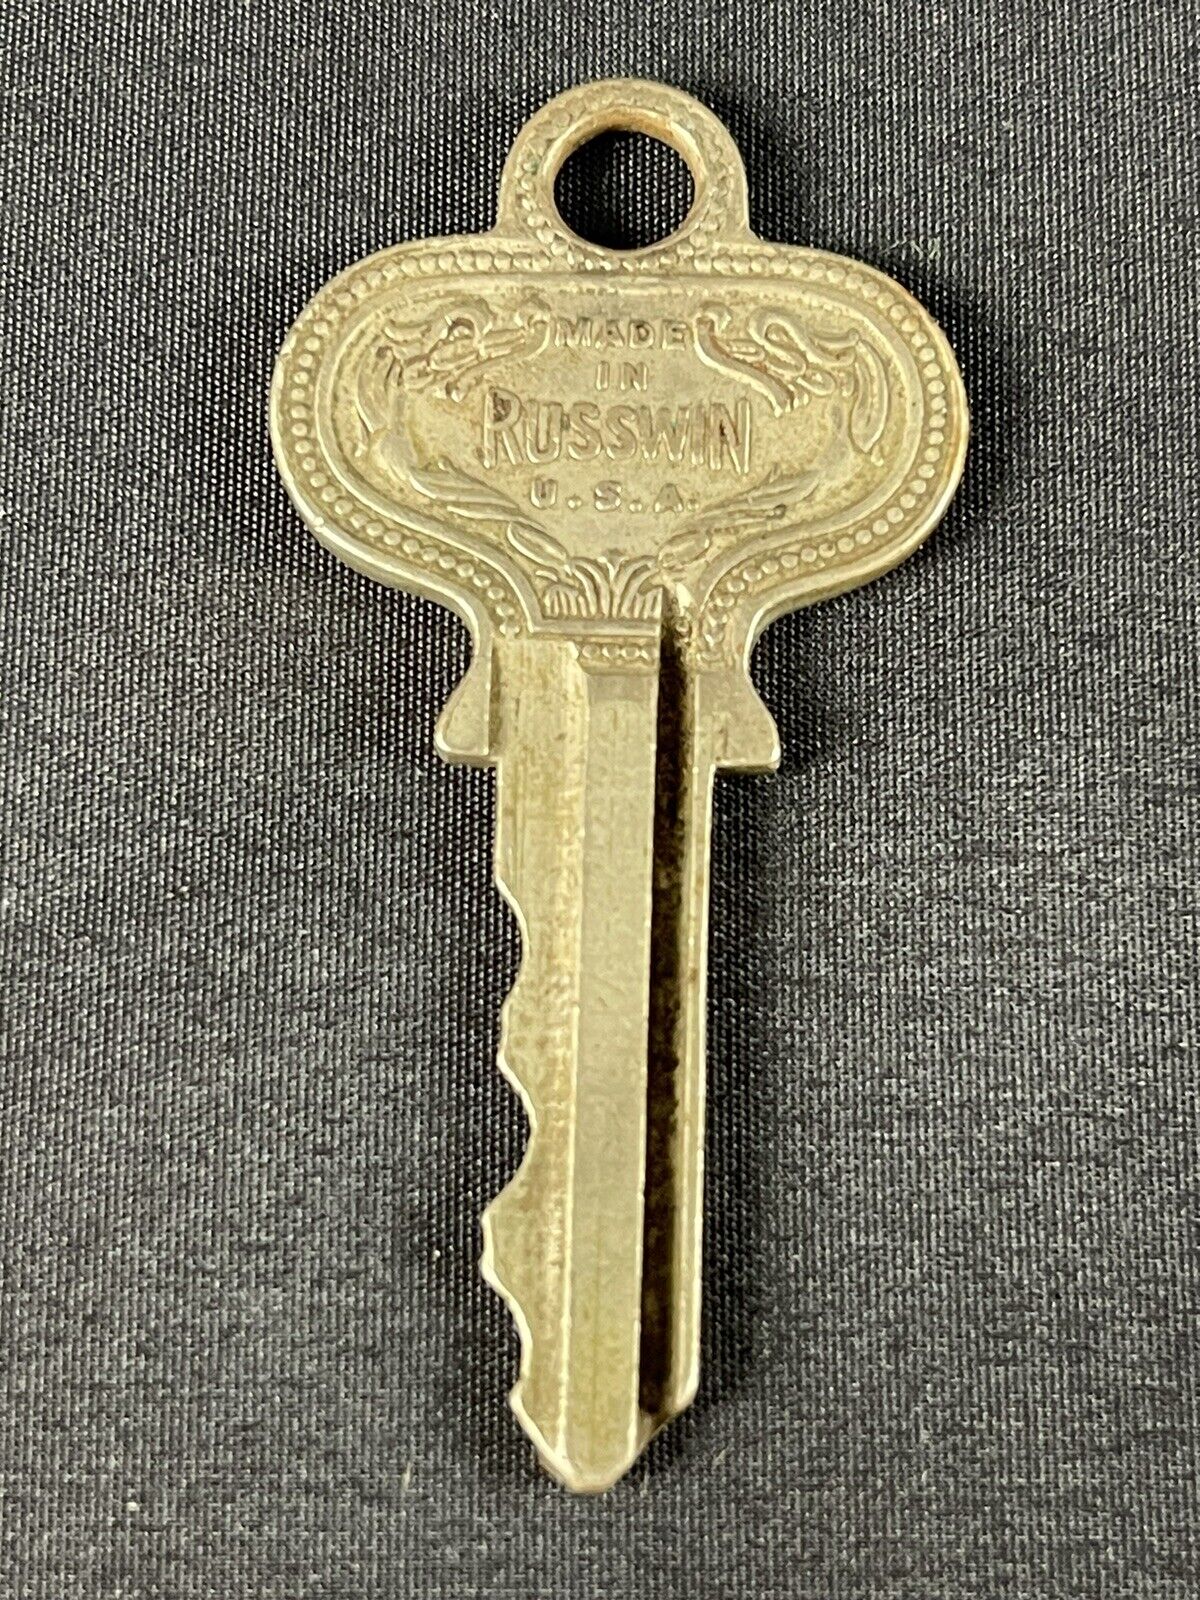 Vintage Ornate Brass Key # R 12683  Made In Russwin  USA